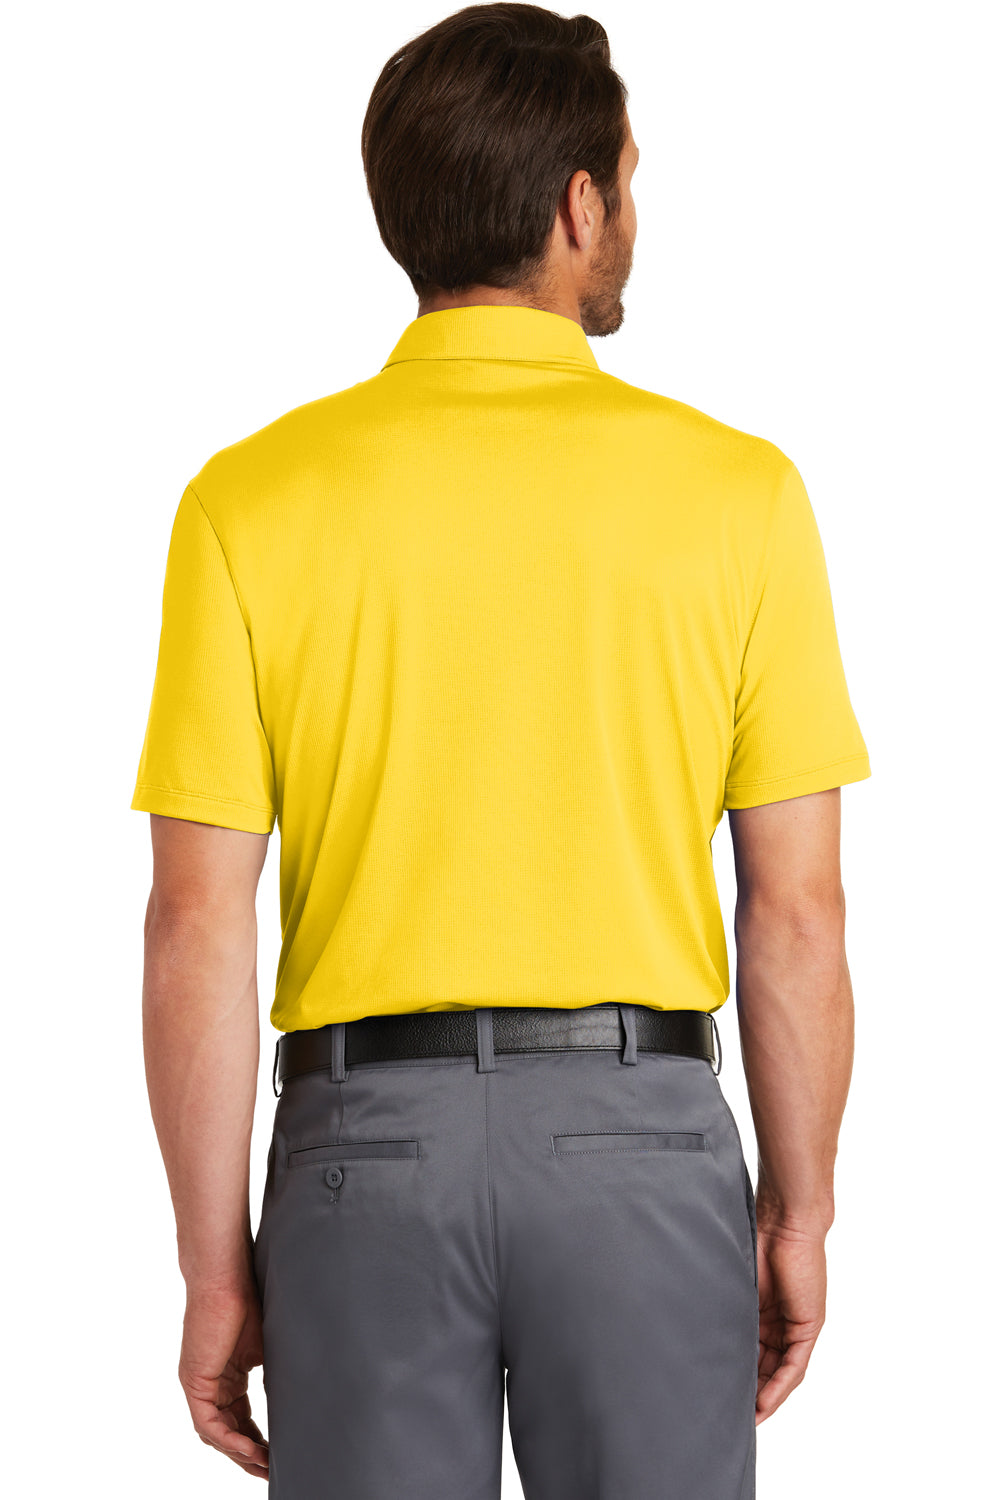 Nike 883681 Mens Legacy Dri-Fit Moisture Wicking Short Sleeve Polo Shirt Yellow Back